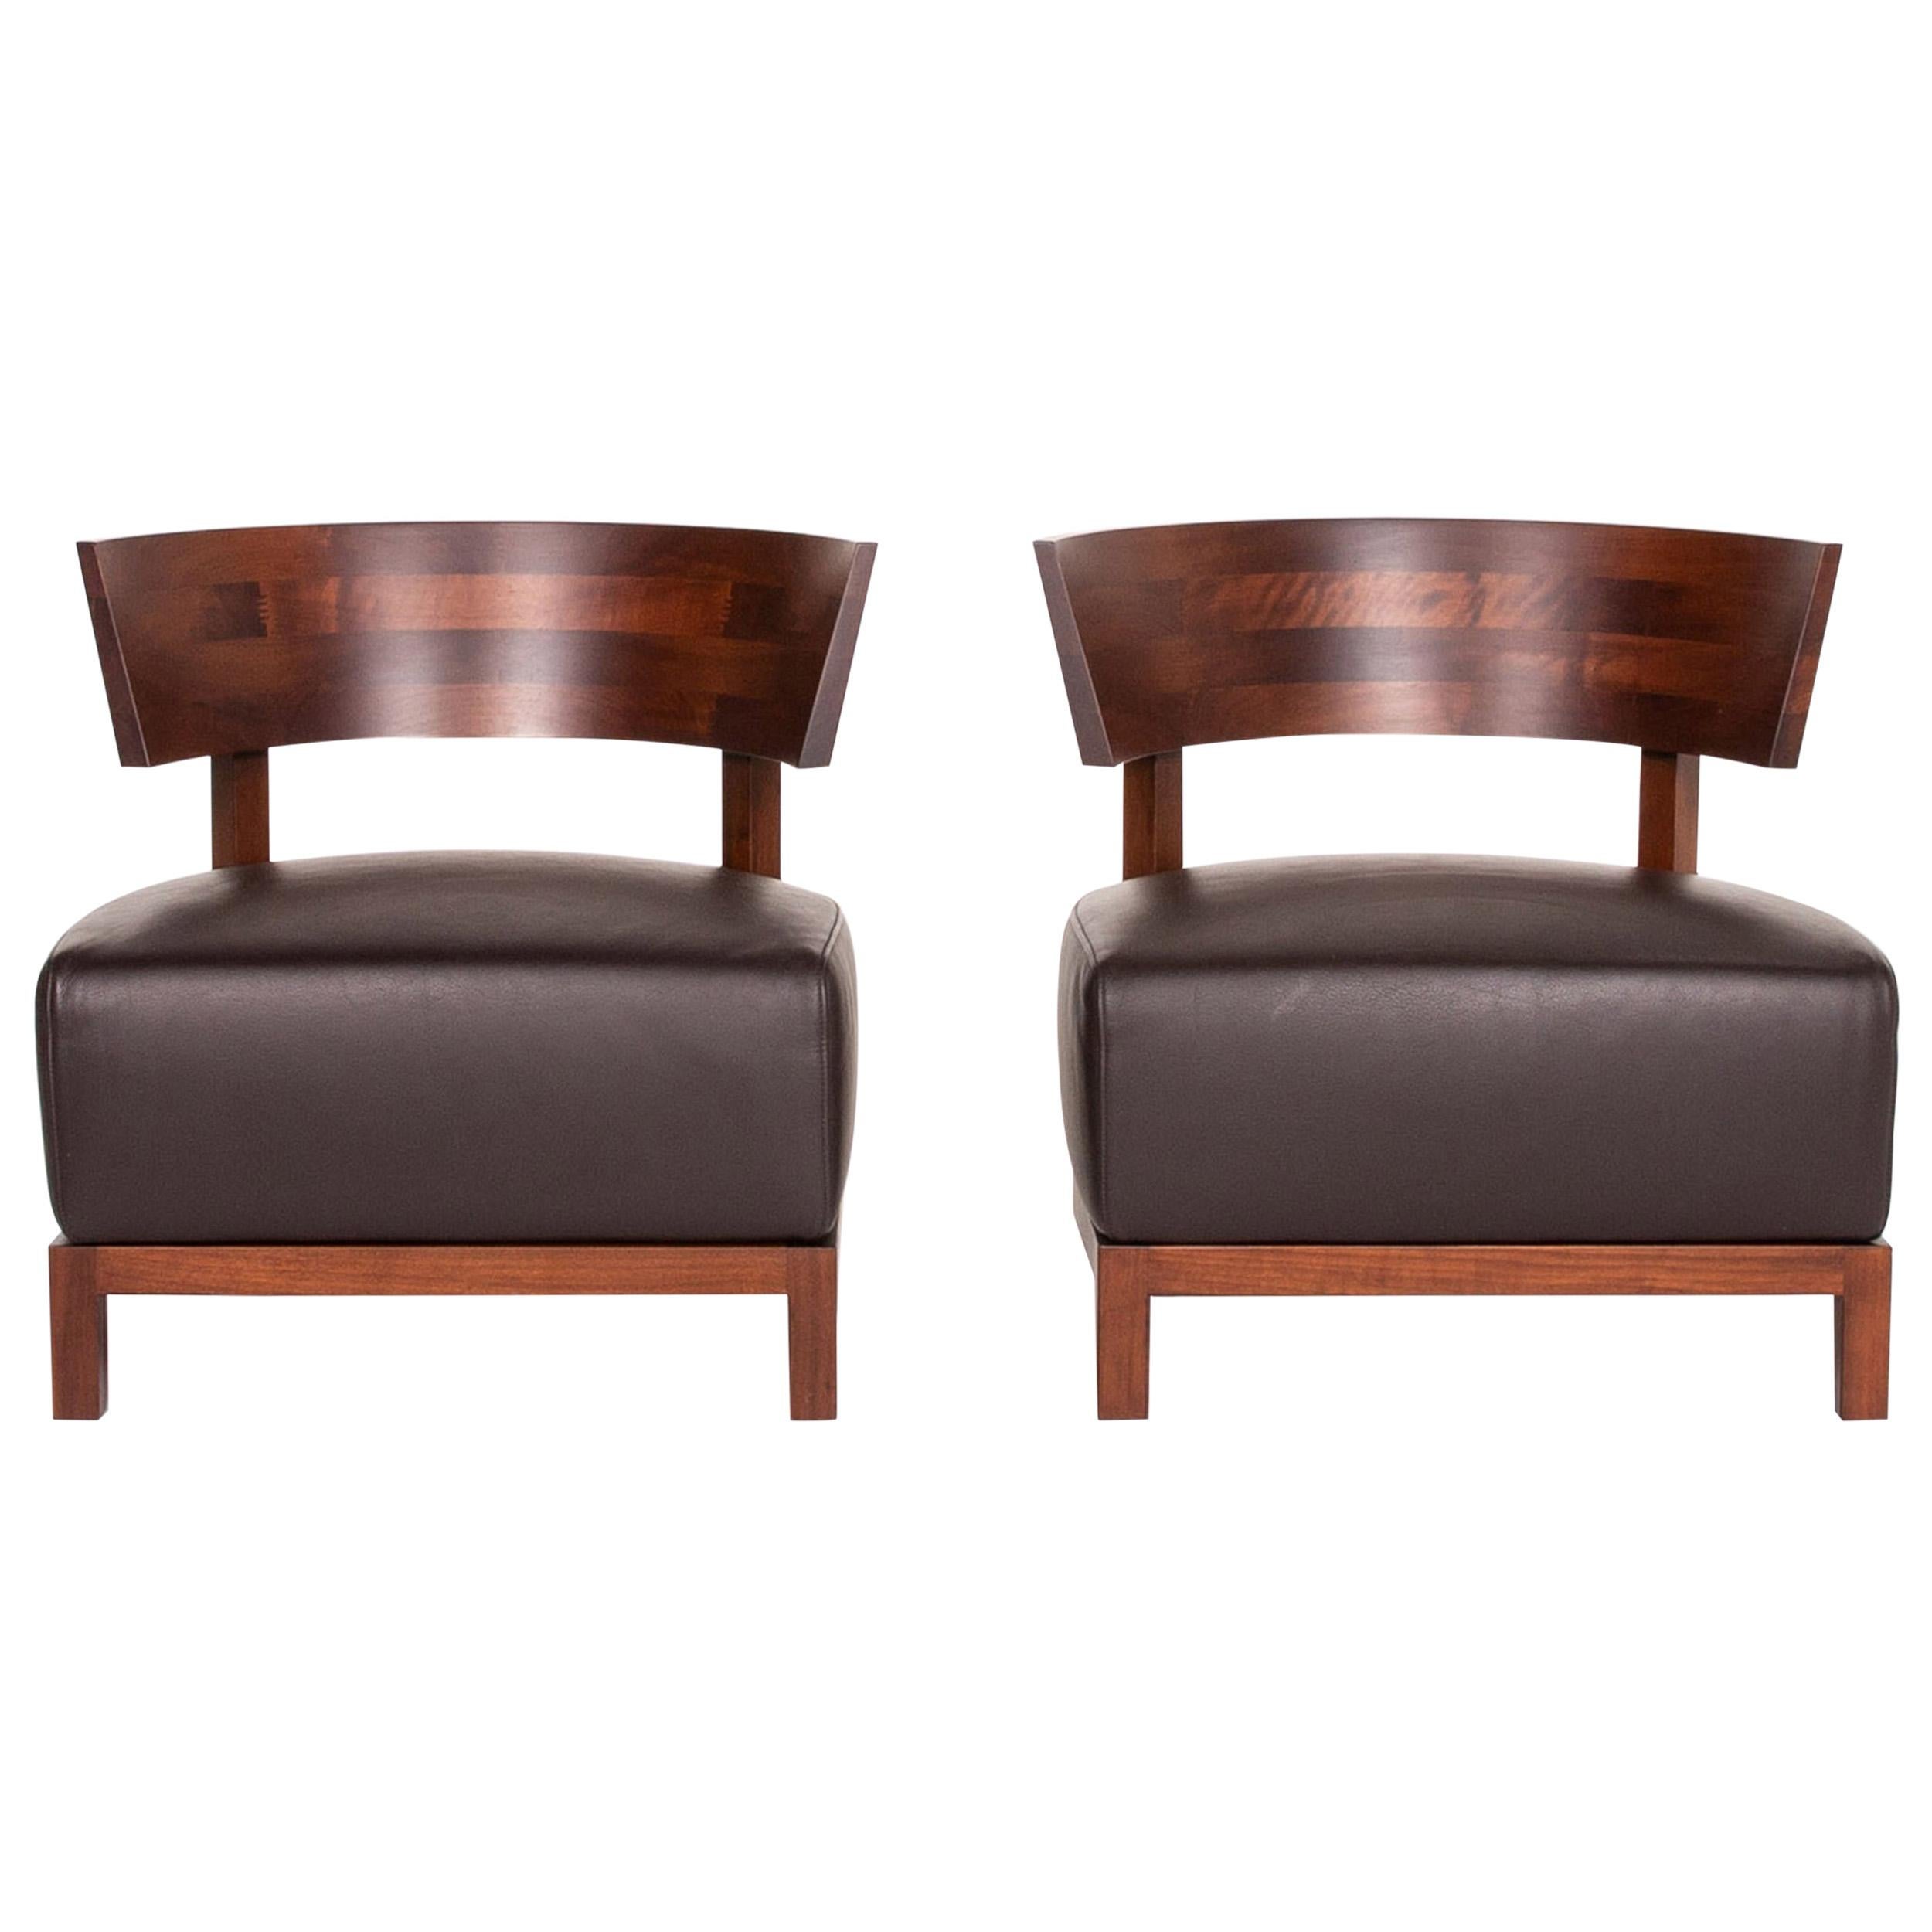 Flexform Thomas Wood Leather Armchair Set Brown Dark Brown 2 Chair Antonio